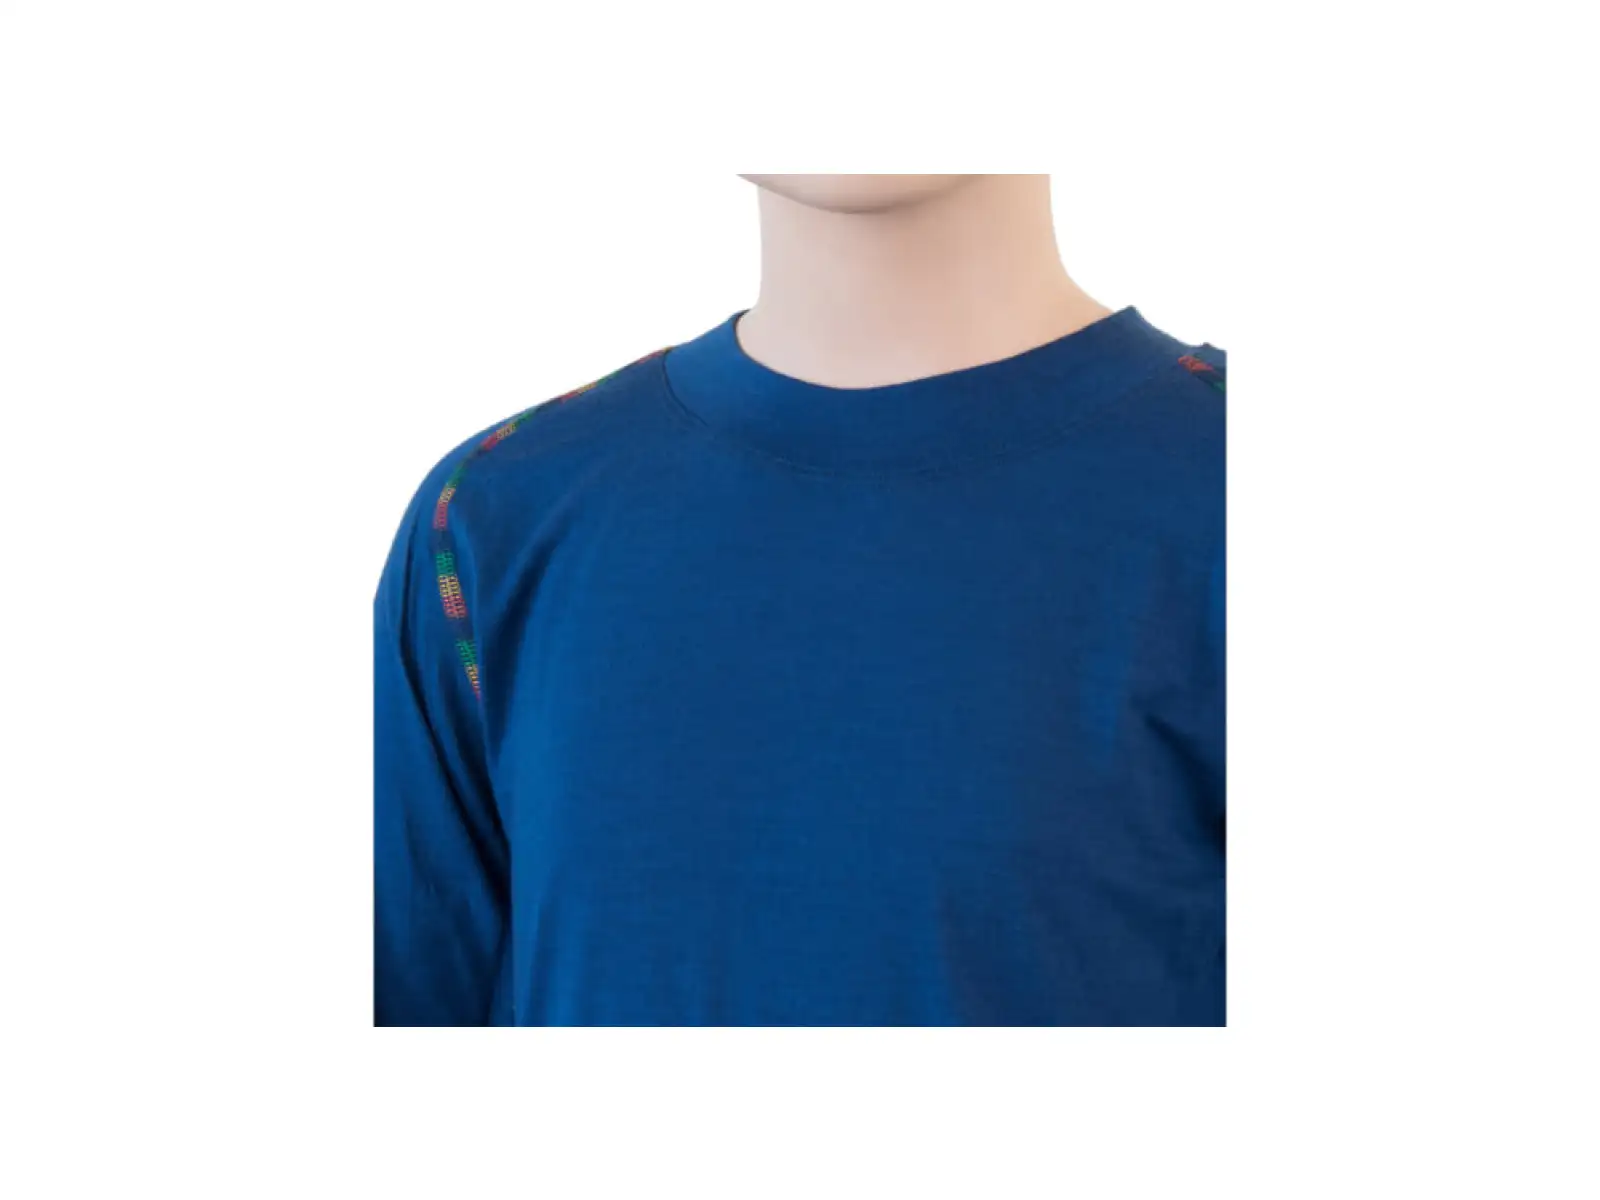 Sensor Merino Air set dětské triko dlouhý rukáv + kalhoty tmavě modrá